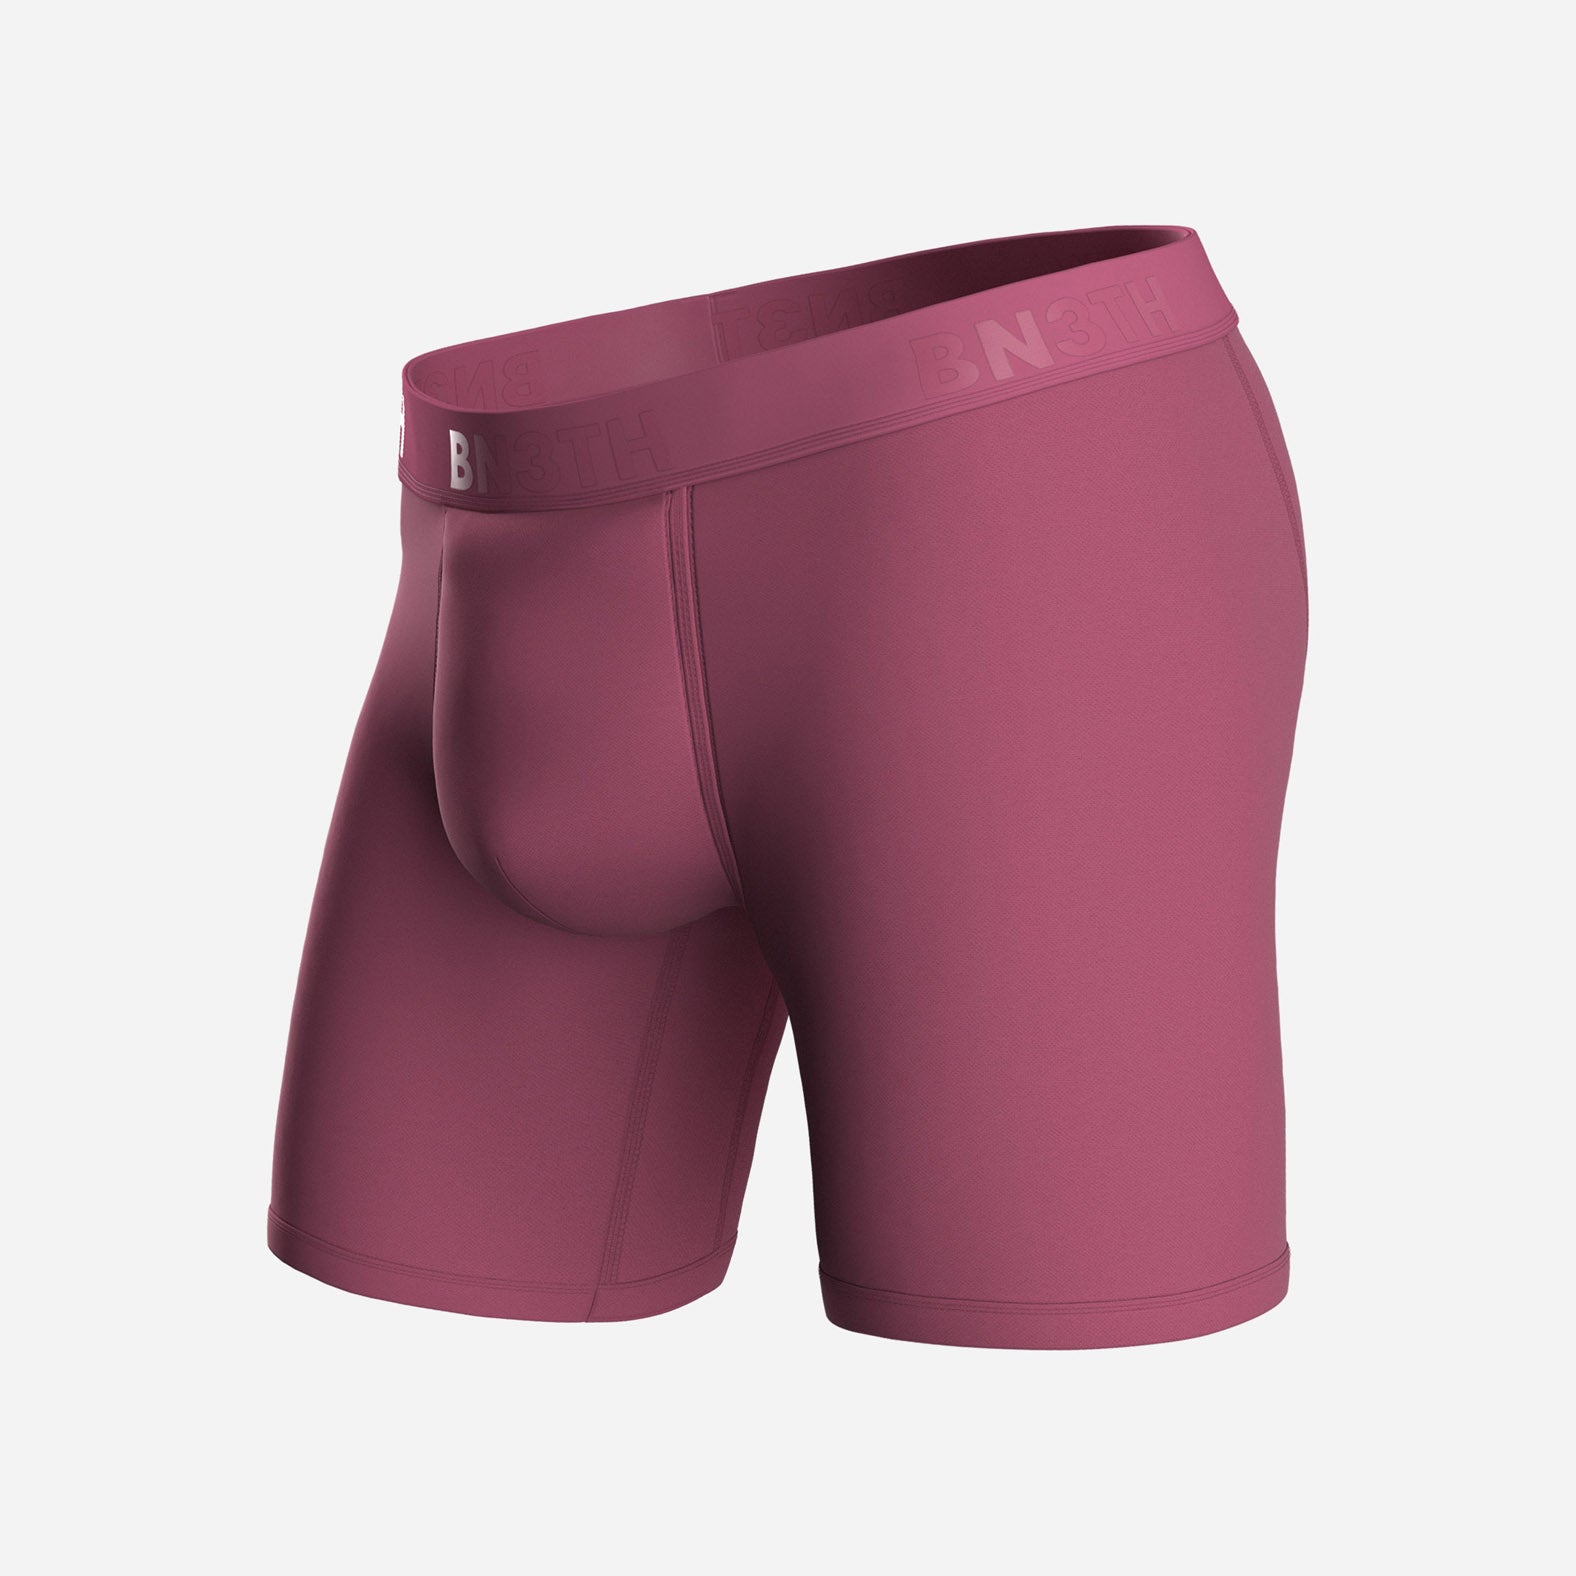 BN3TH Underwear Classic Boxer Brief Solid - Acai - BUNKER